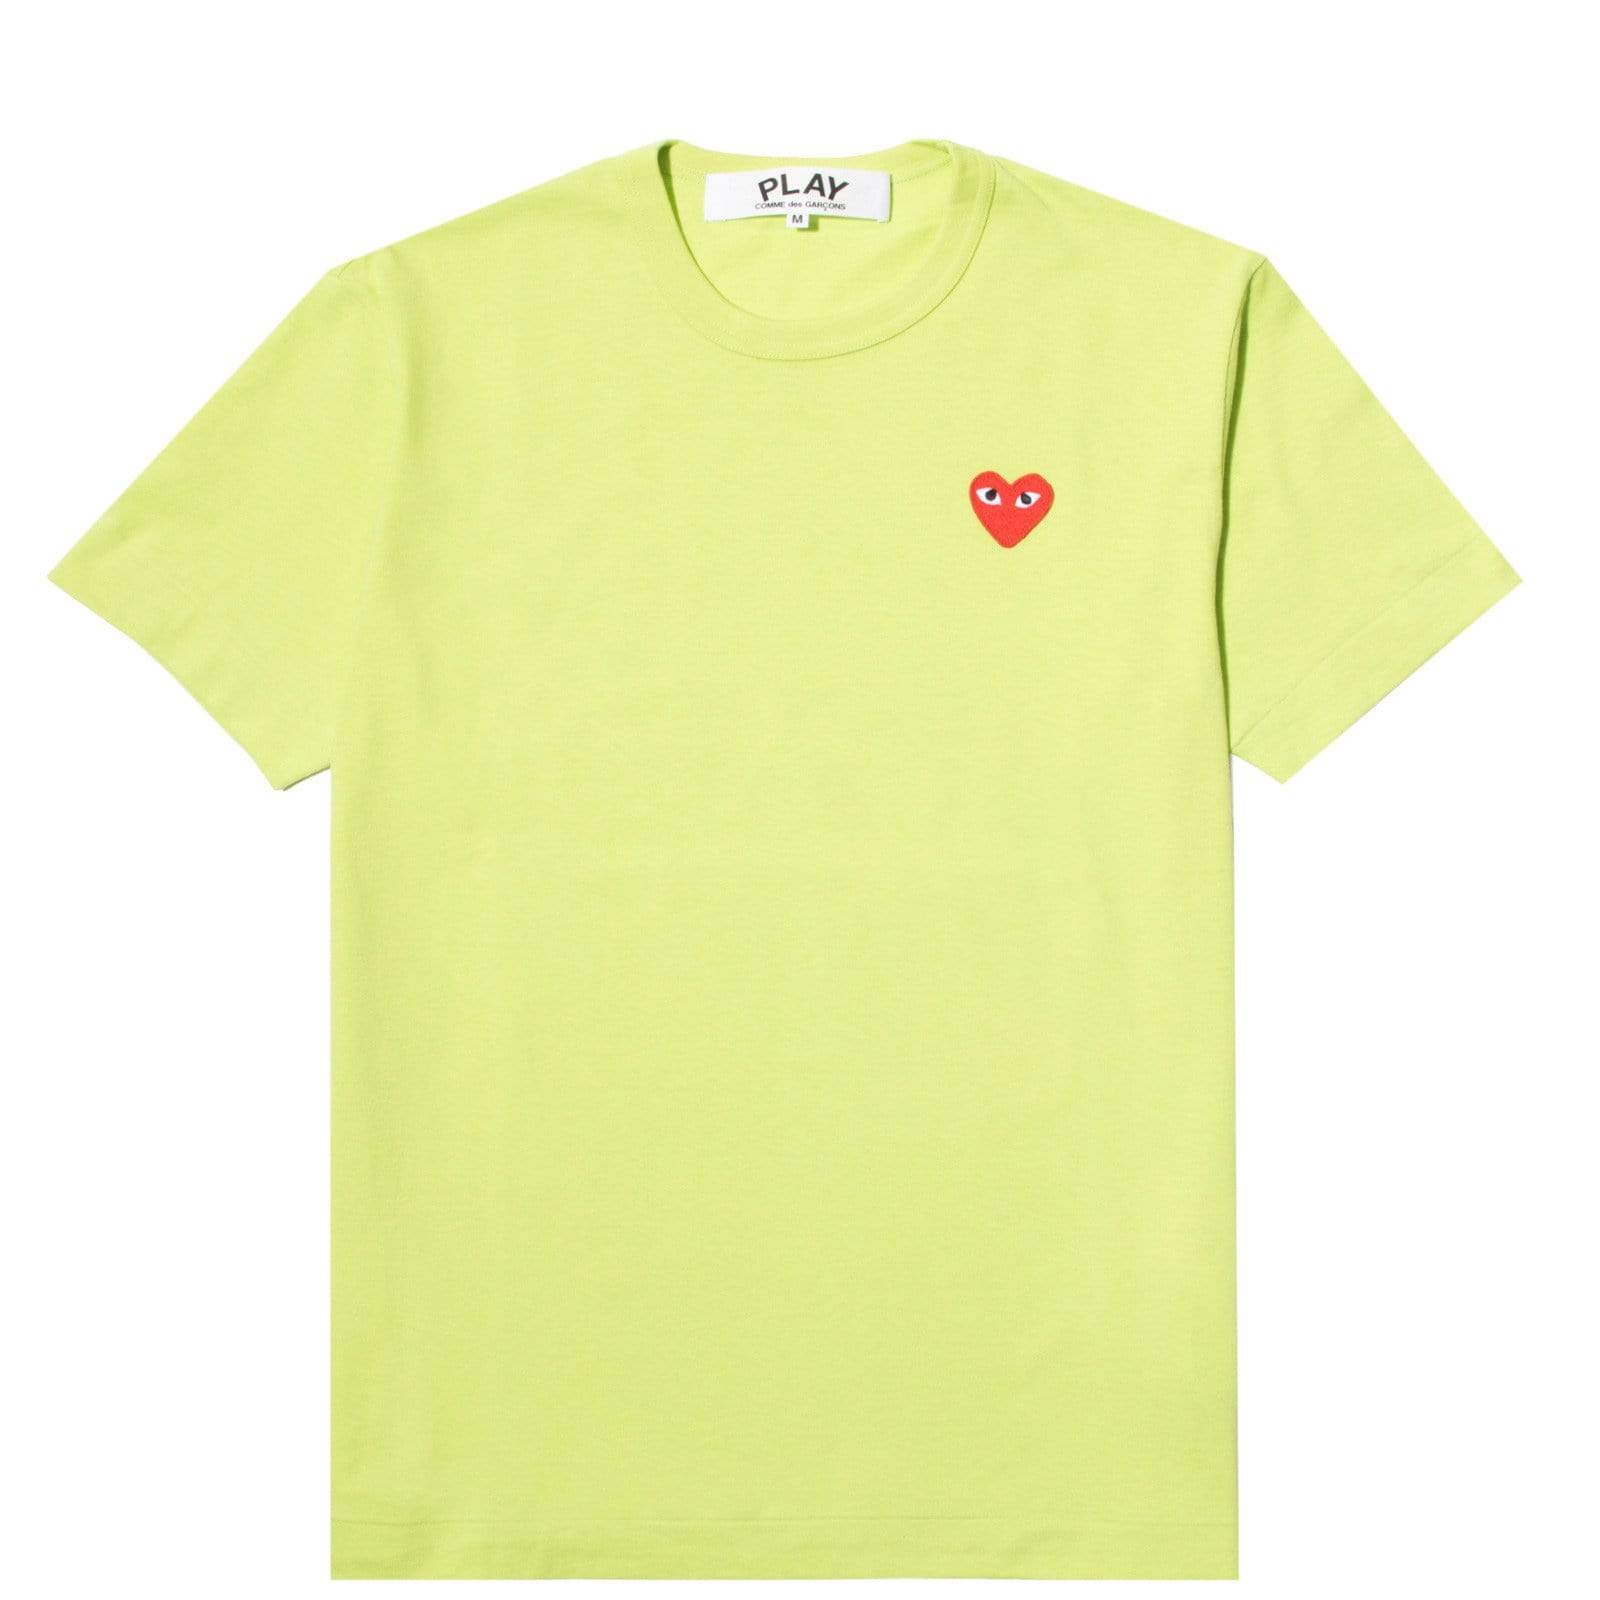 Overleving Sneeuwstorm beetje Shirt Green/Red Heart – GmarShops Store - Play T - adidas originals Men s  clothing Pants